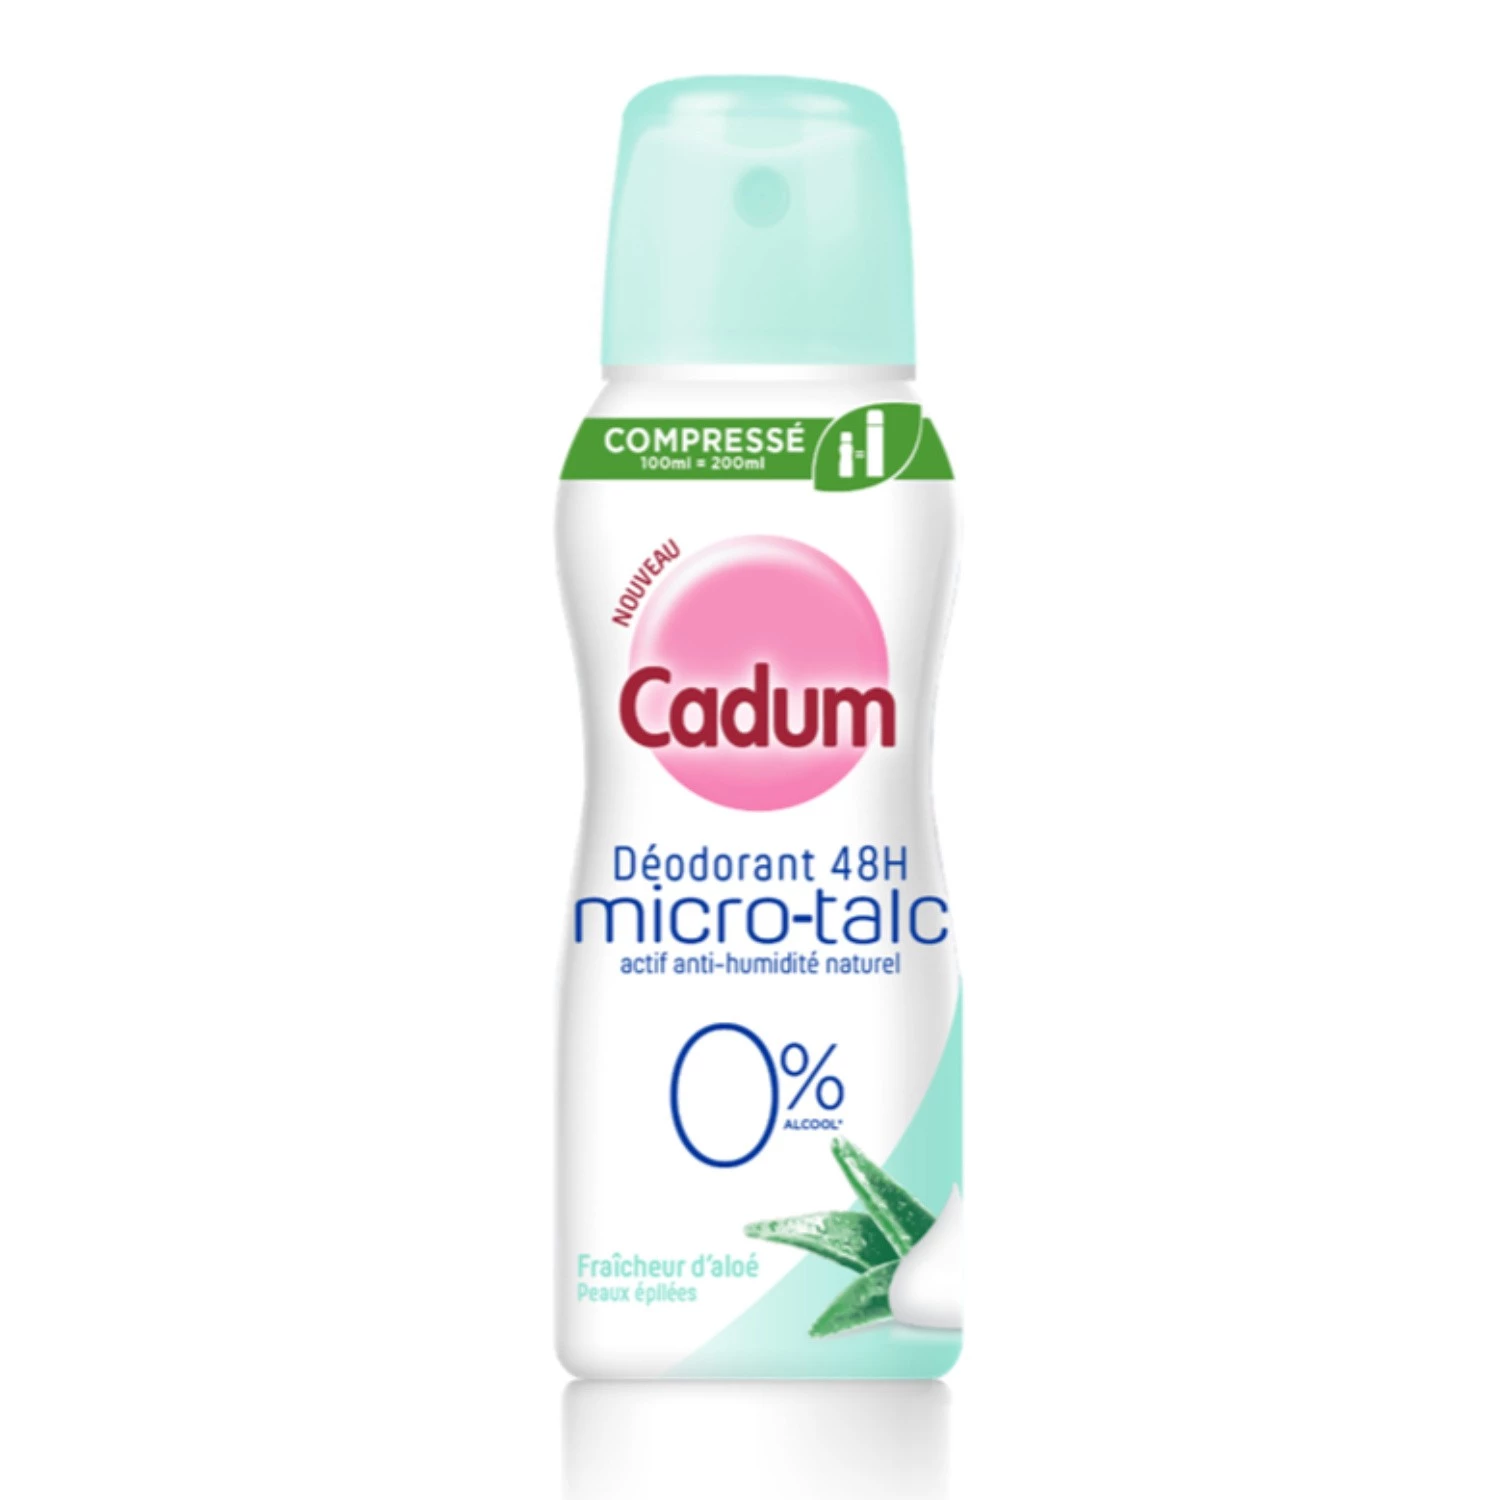 Compressed deodorant 4 hours micro talc freshness of aloe 100ml - CADUM